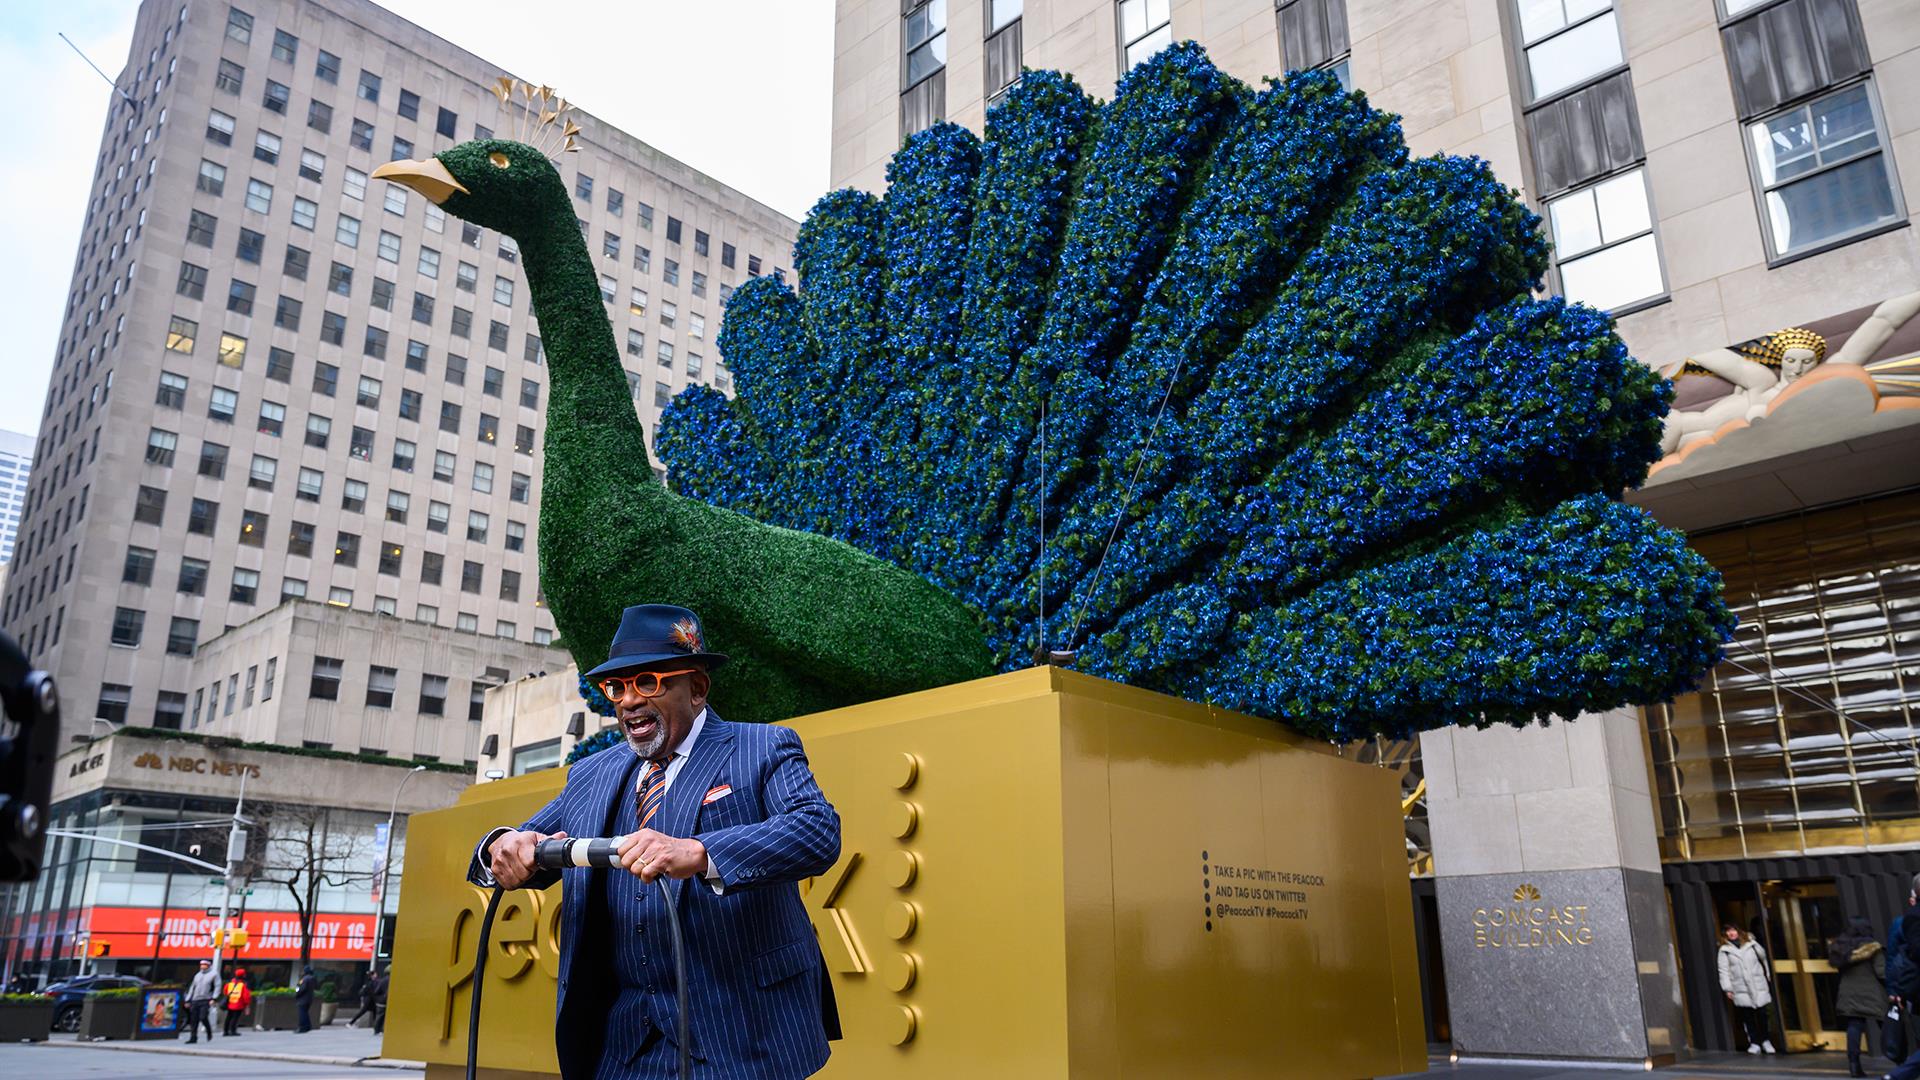 Meet the new 'Peacock Tree' adorning Rockefeller Center